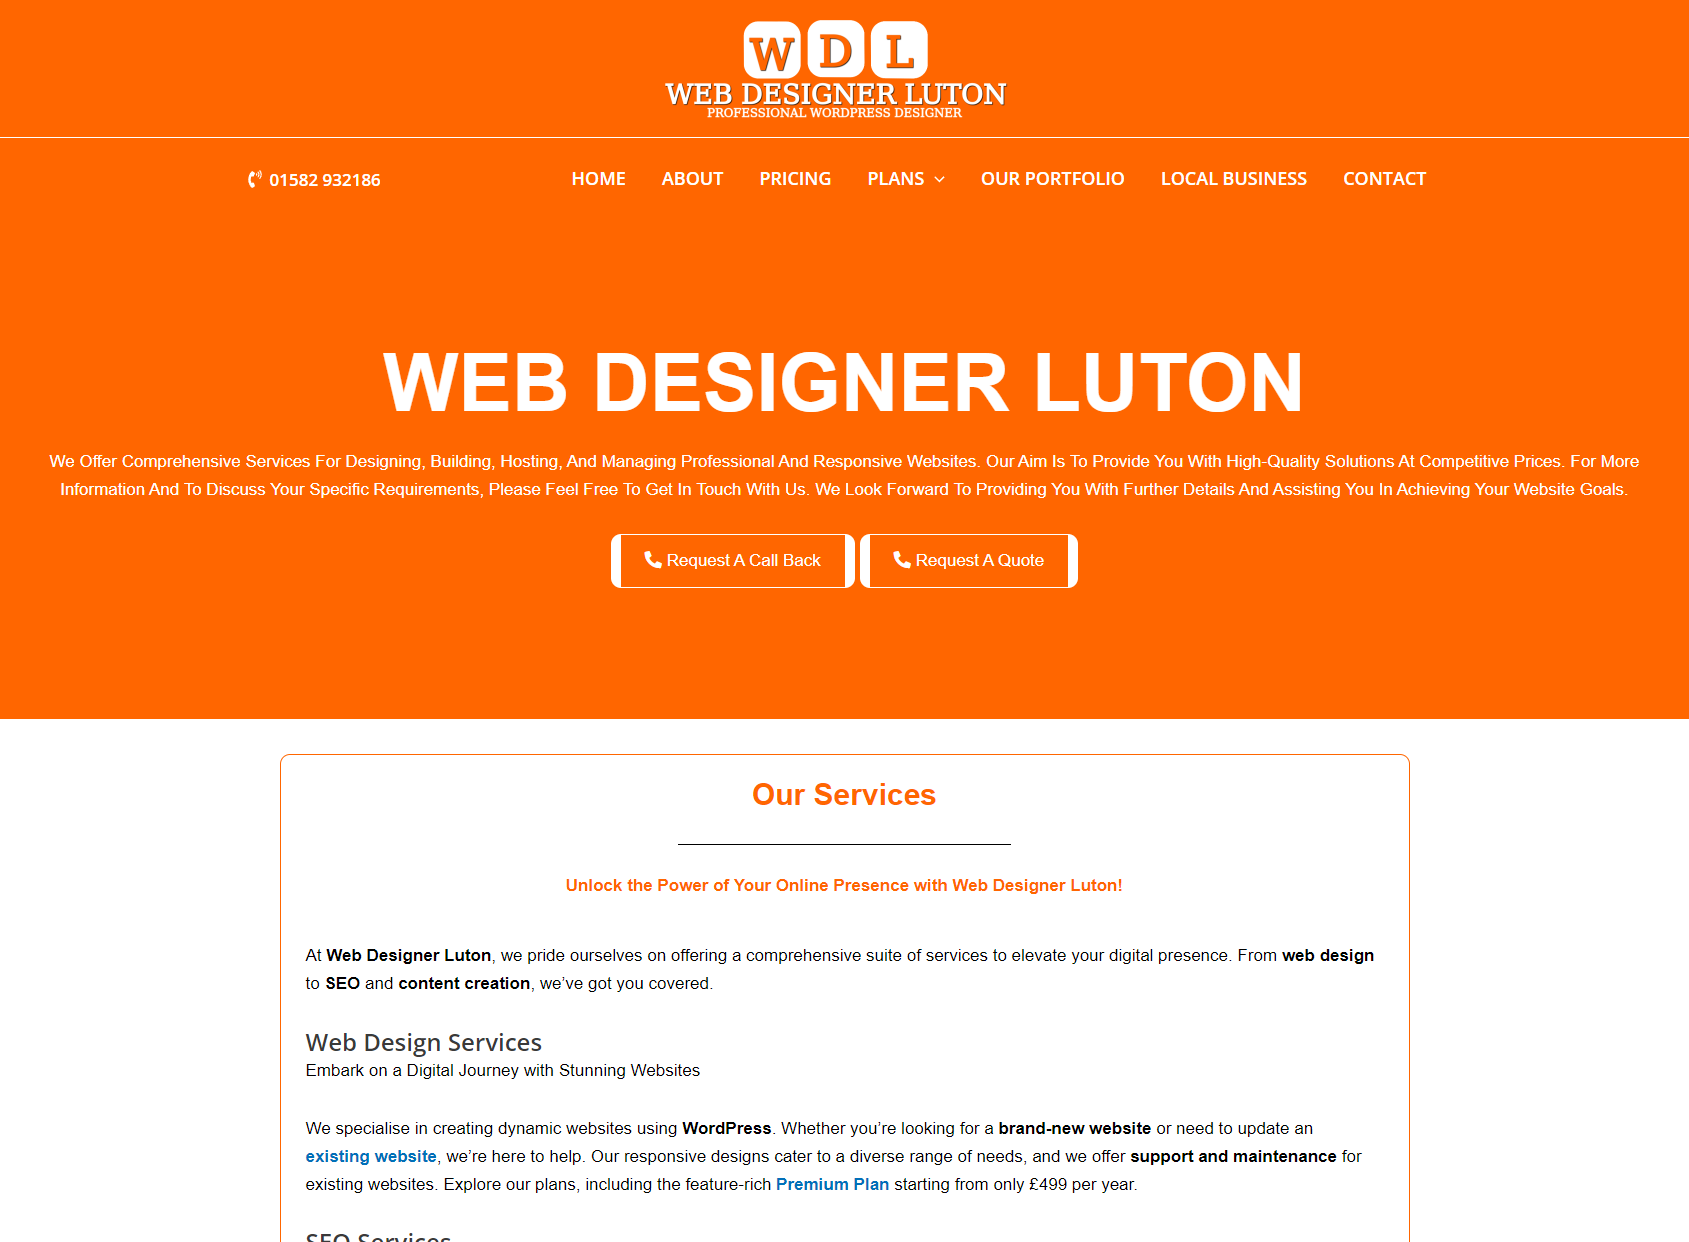 Web designer Luton